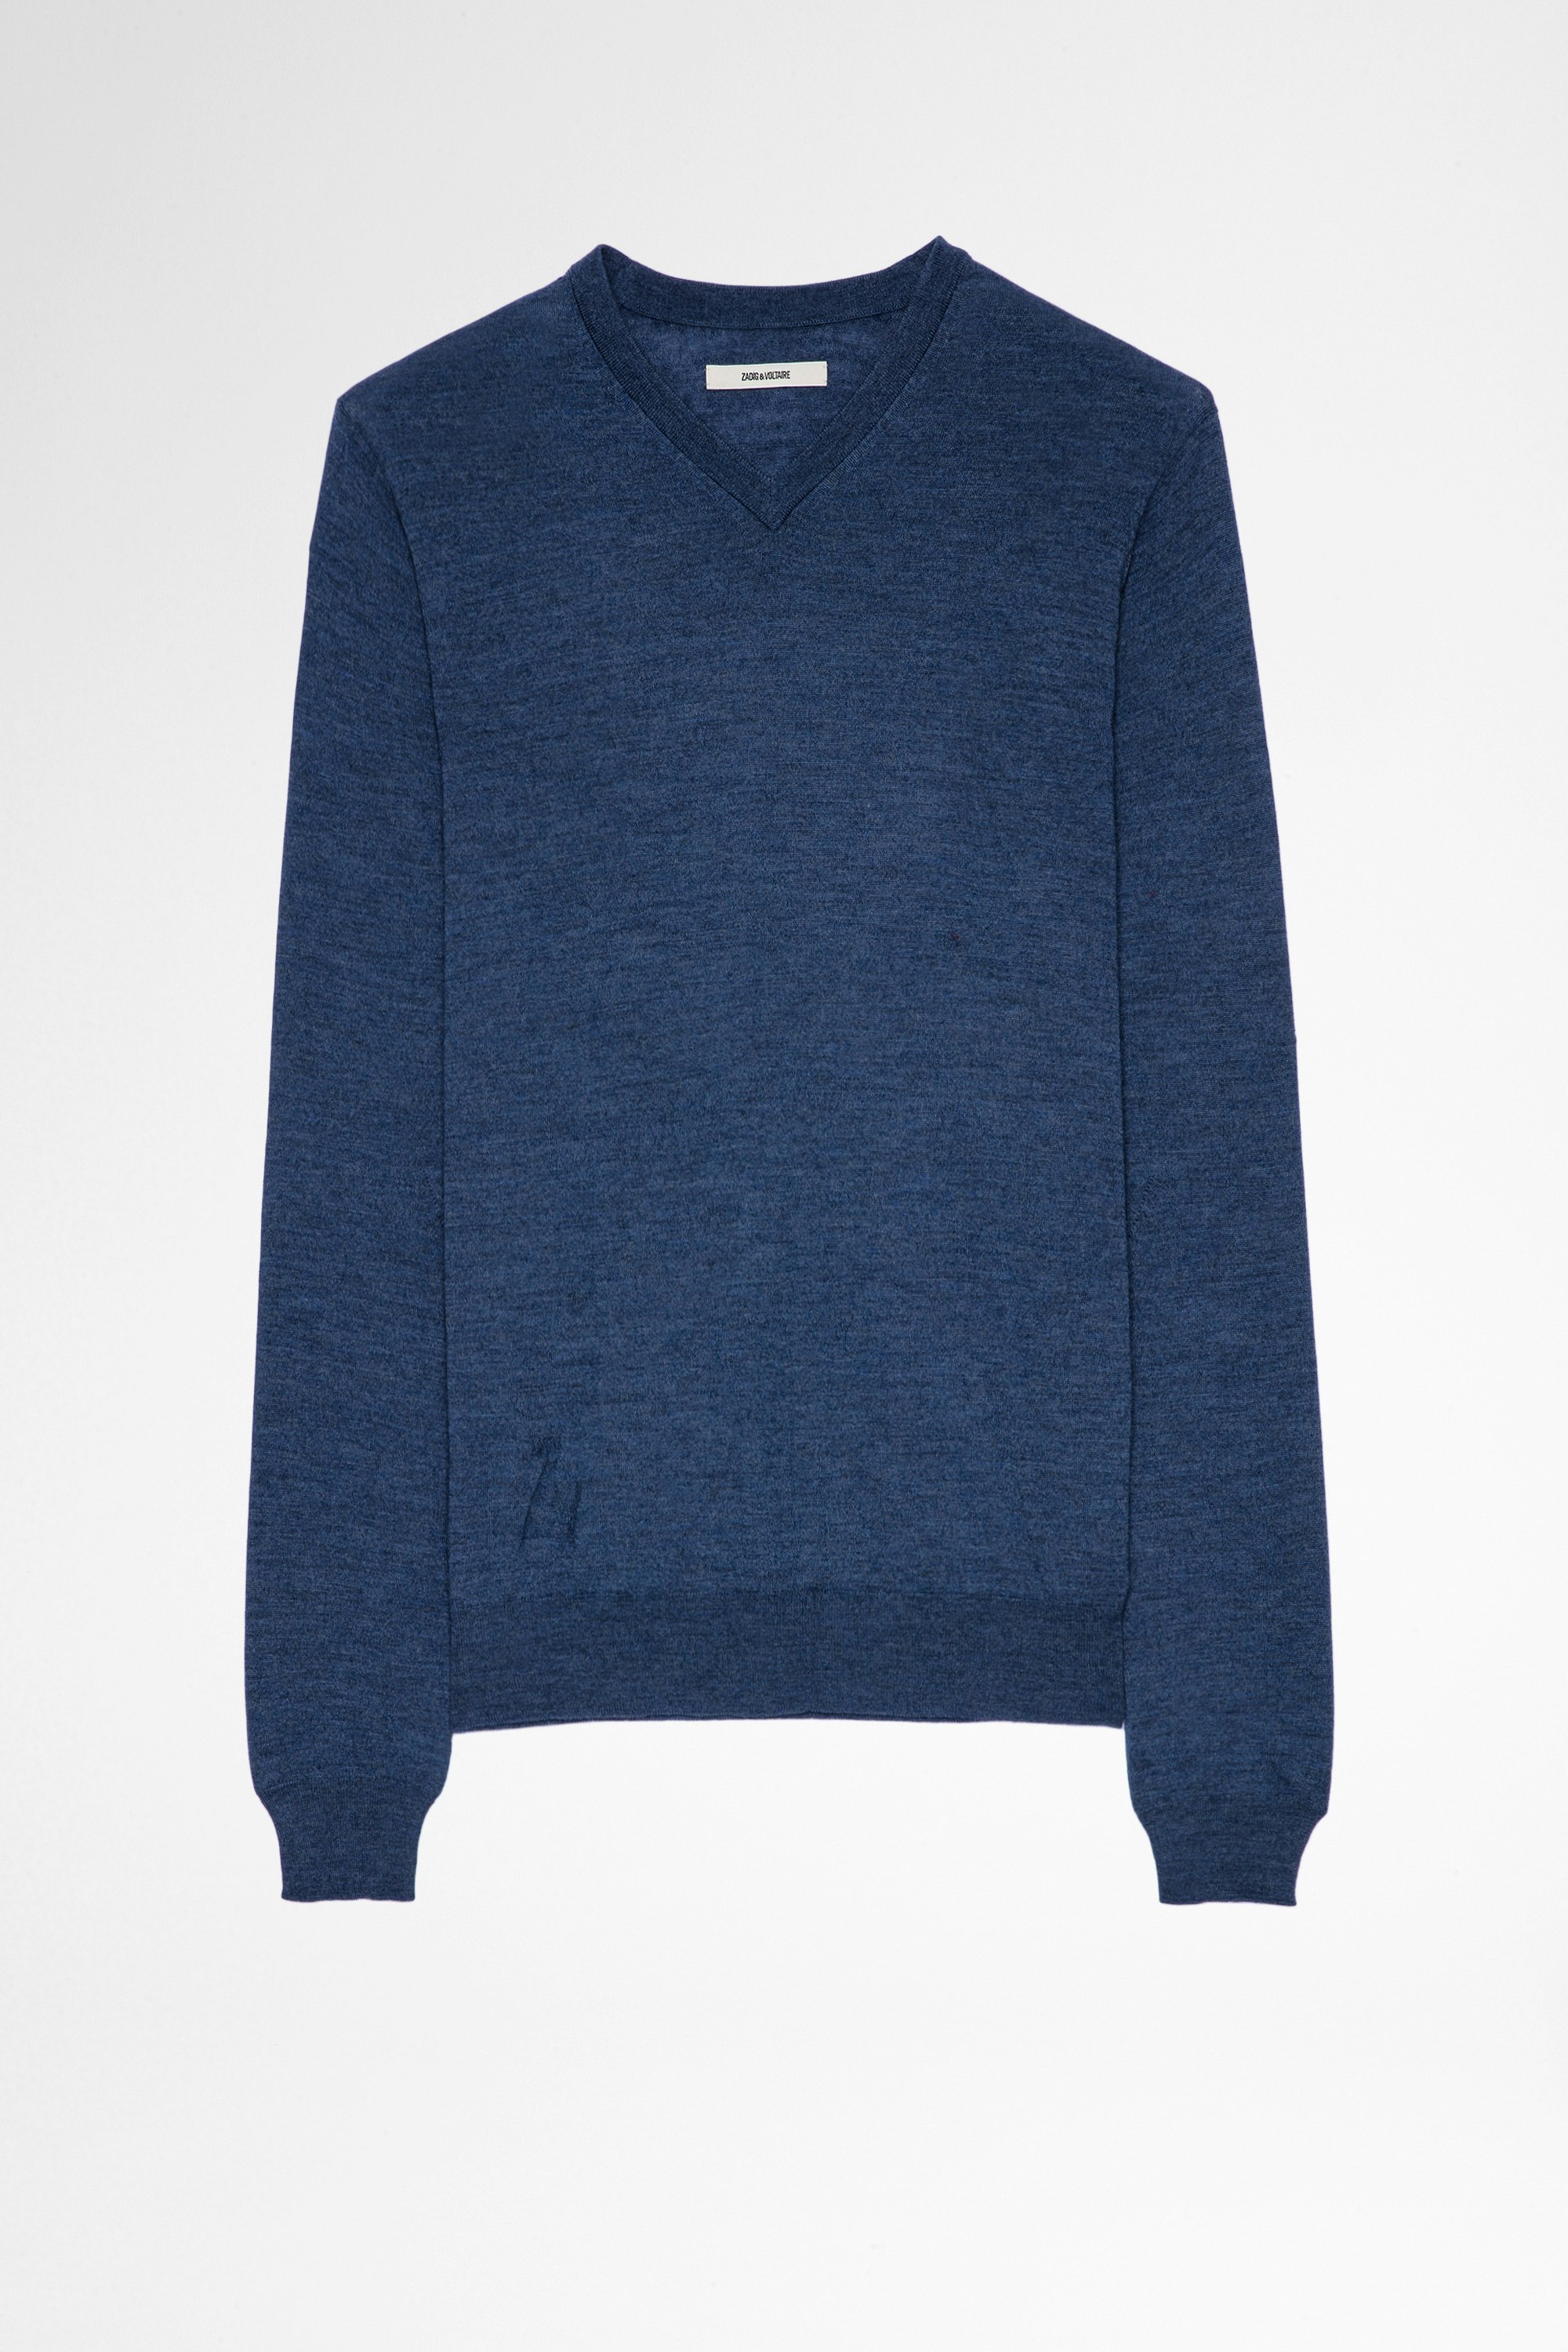 Vasko Jumper Men’s blue merino wool V-neck sweater